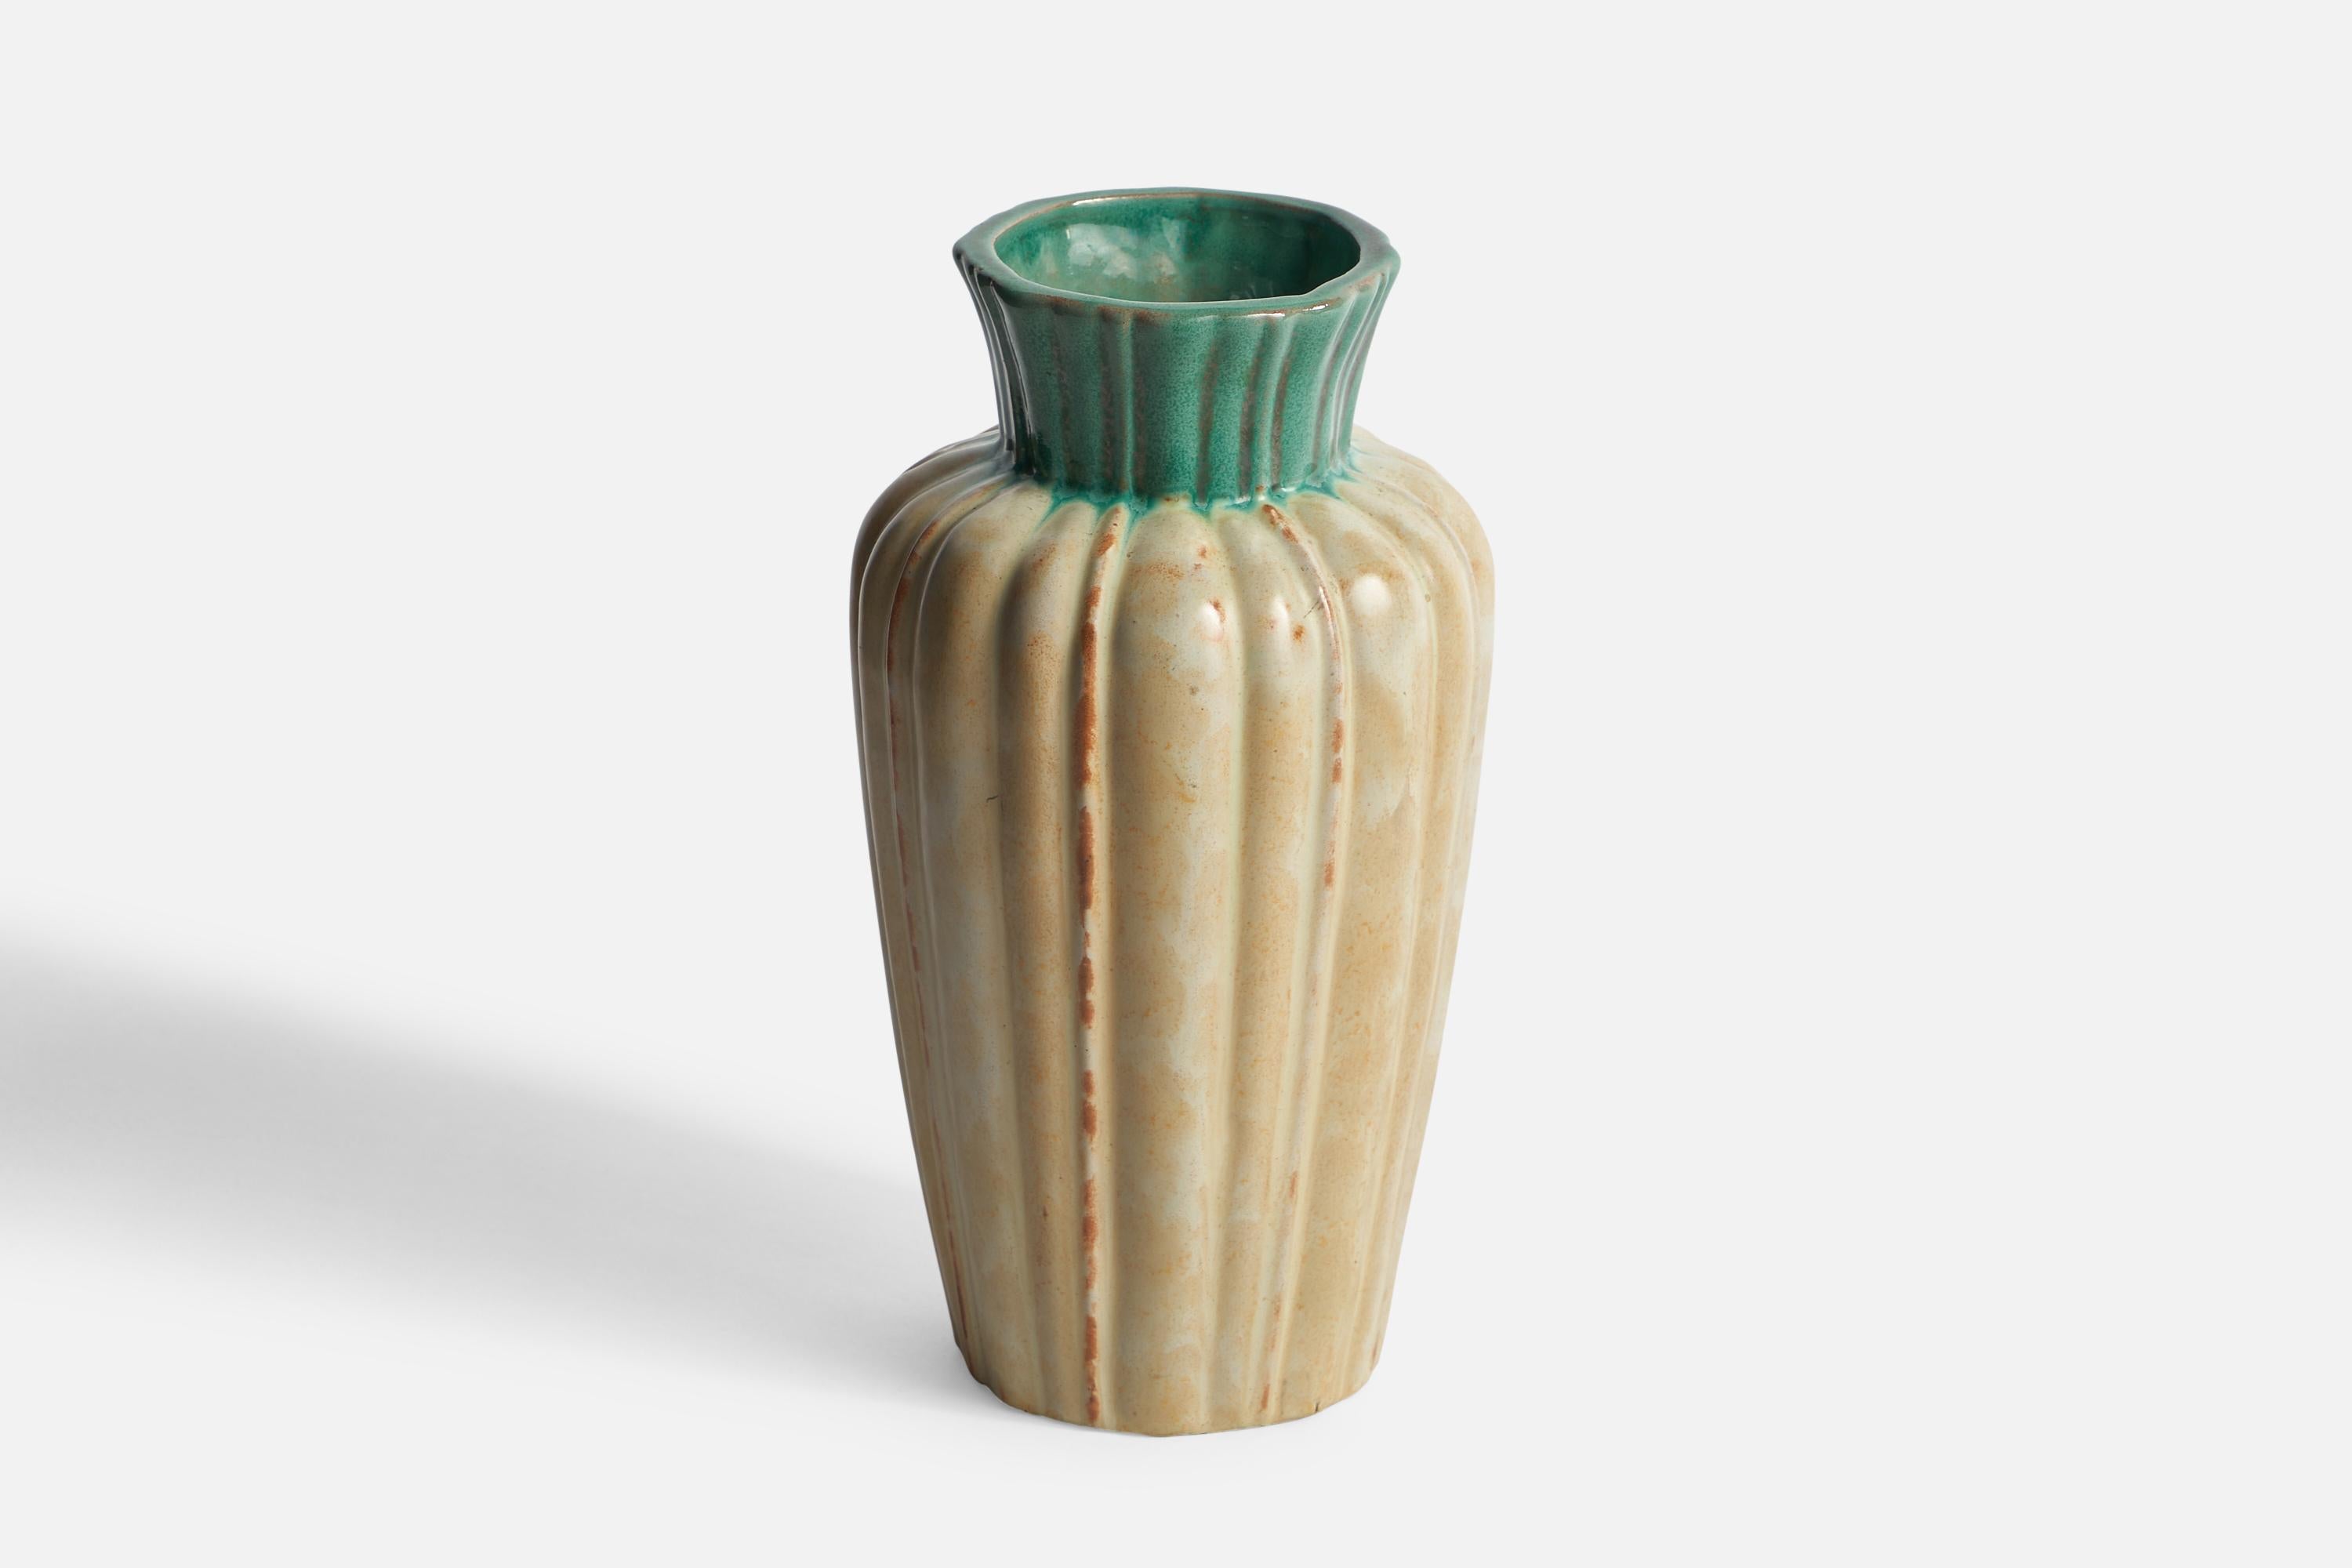 A green and beige-glazed fluted vase designed and produced by Upsala Ekeby, Sweden, 1930s.